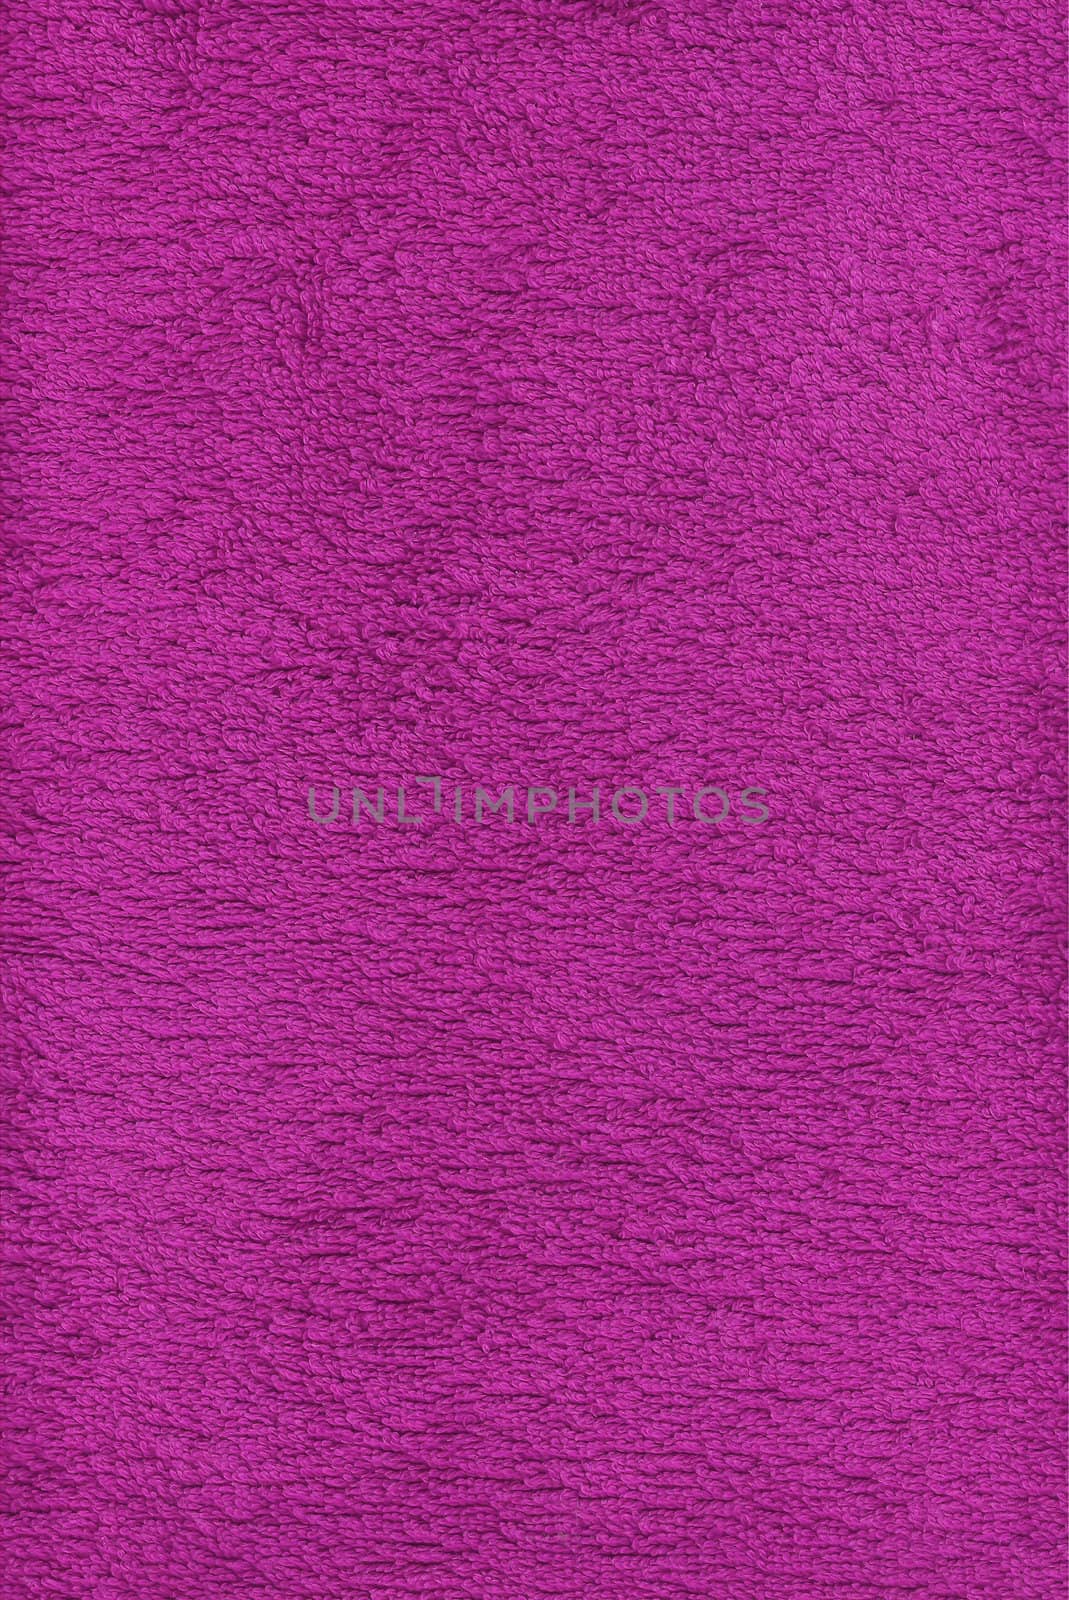 Pink color towel background